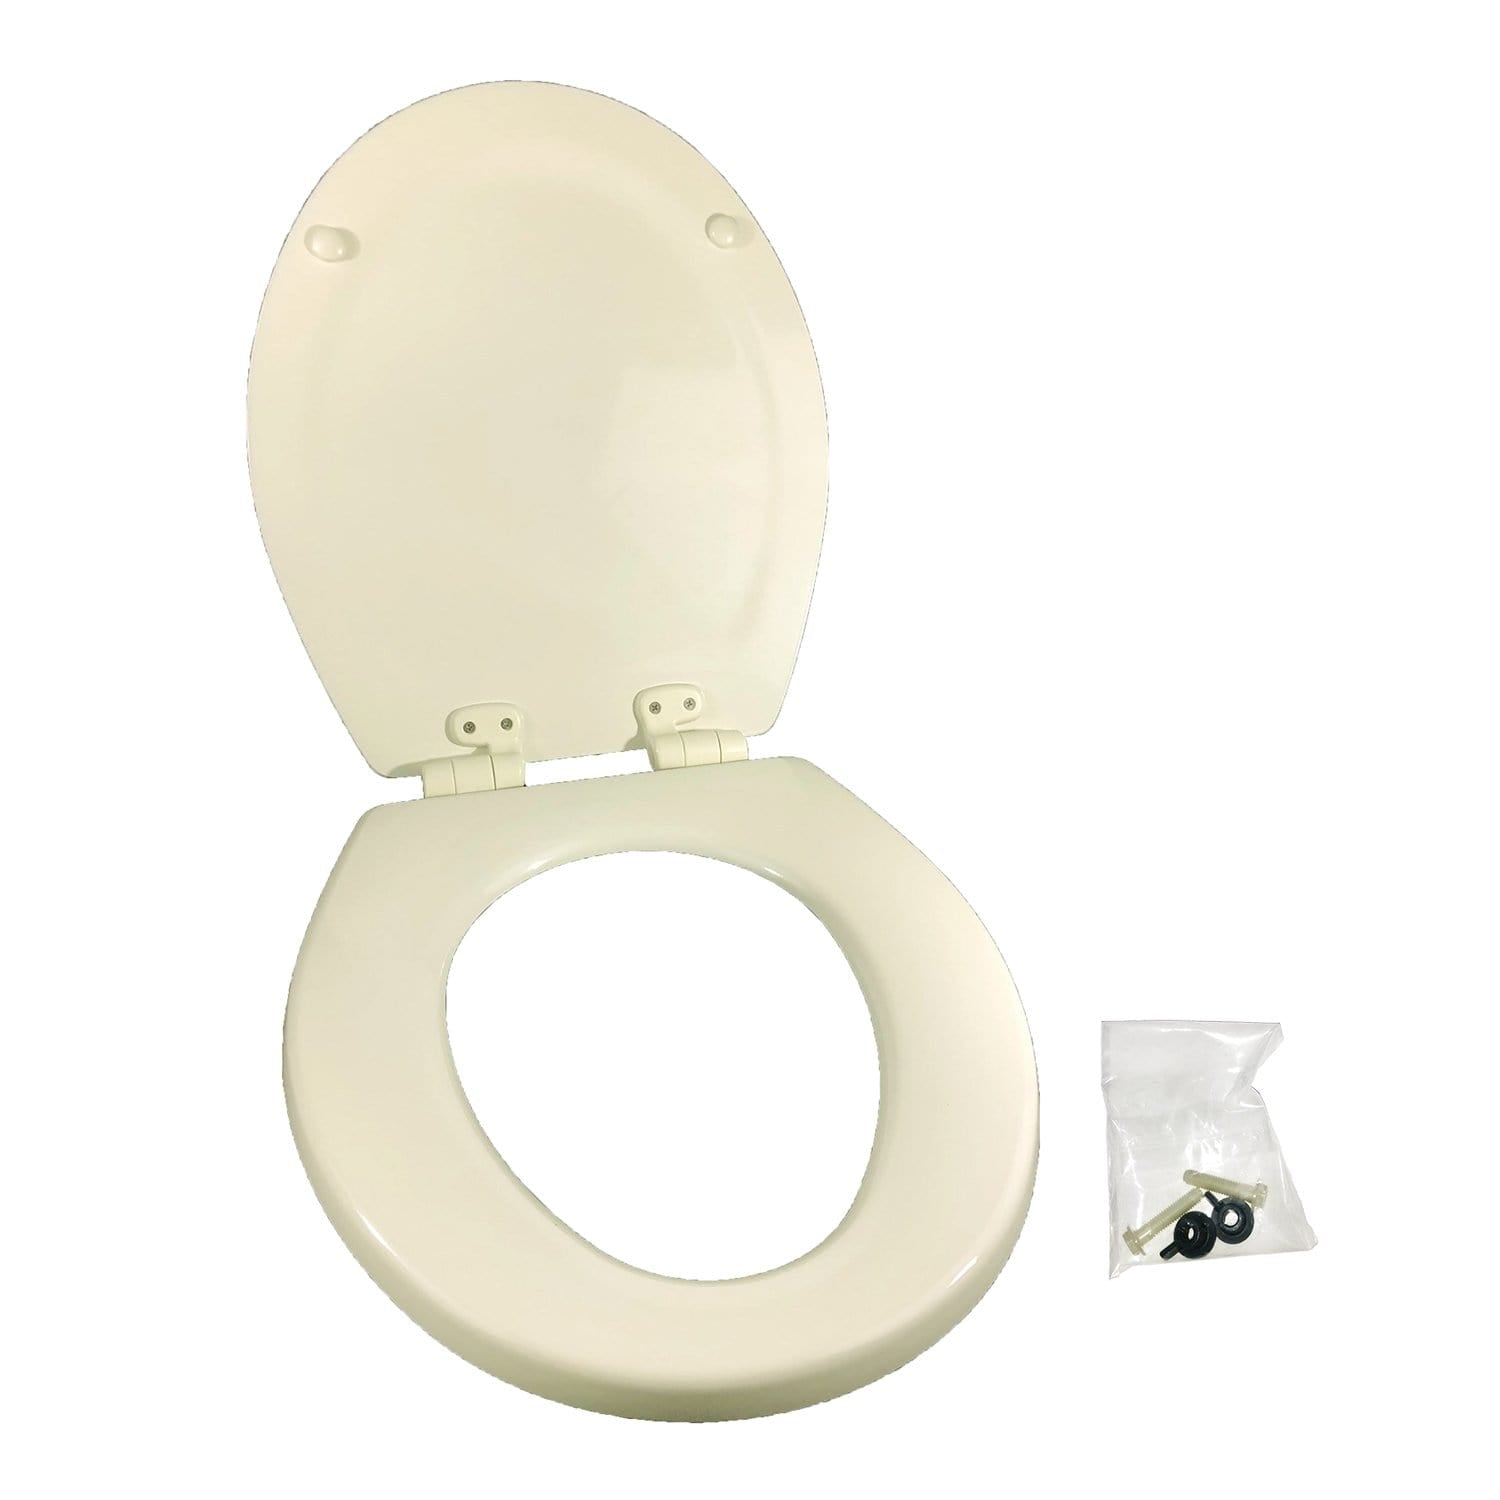 Dometic 385312113 Wood Slow Close Toilet Seat, White